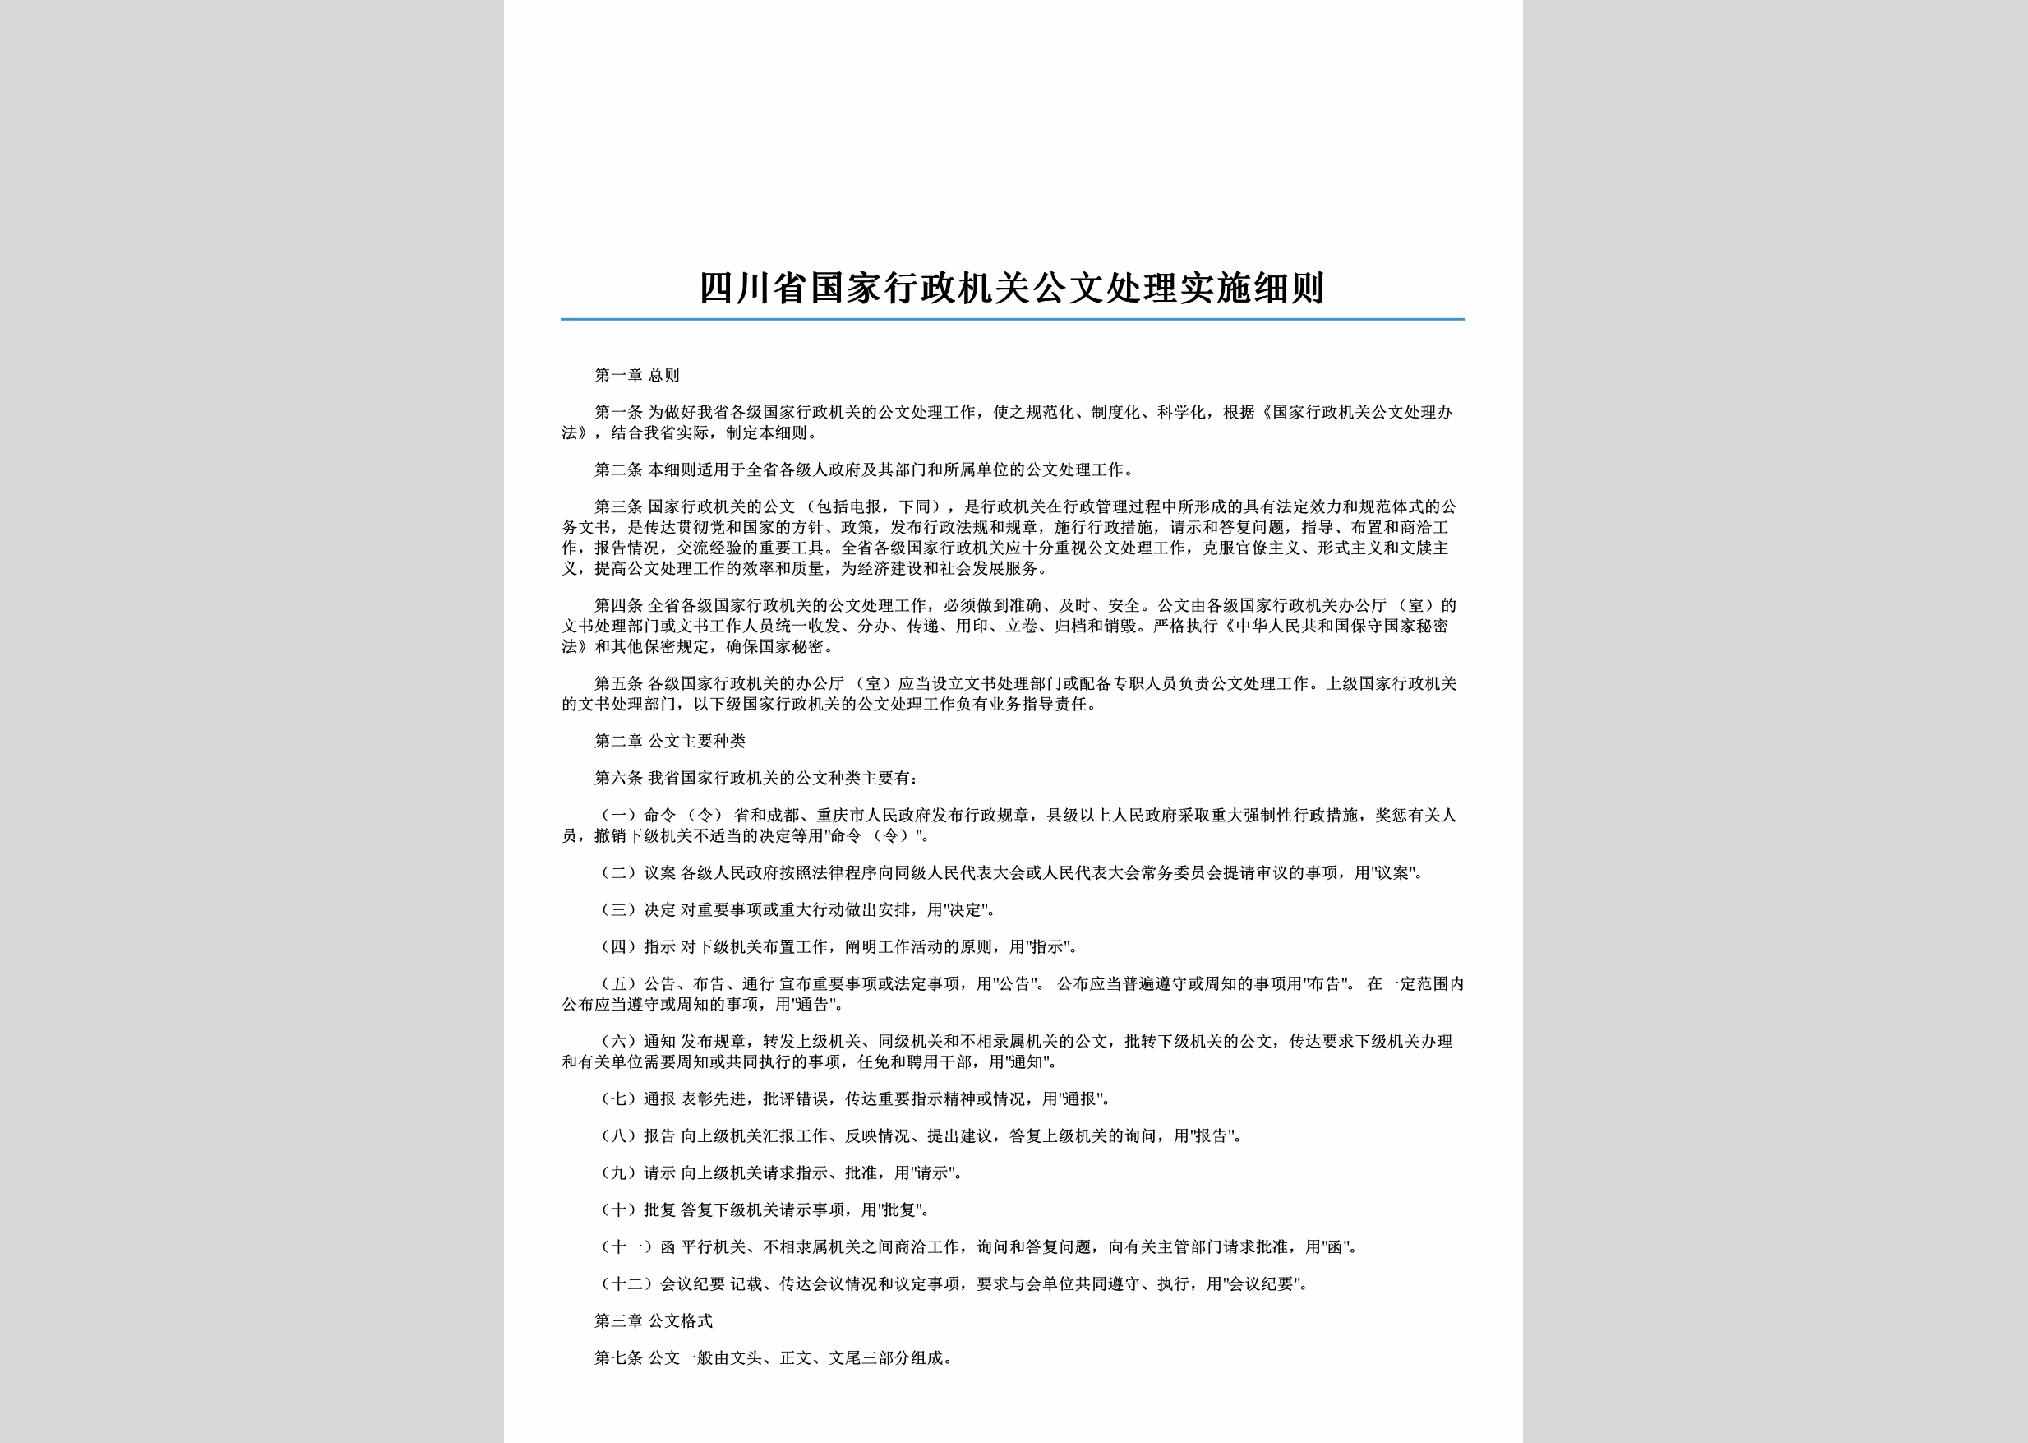 SC-XZGWCLXZ-2006：四川省国家行政机关公文处理实施细则